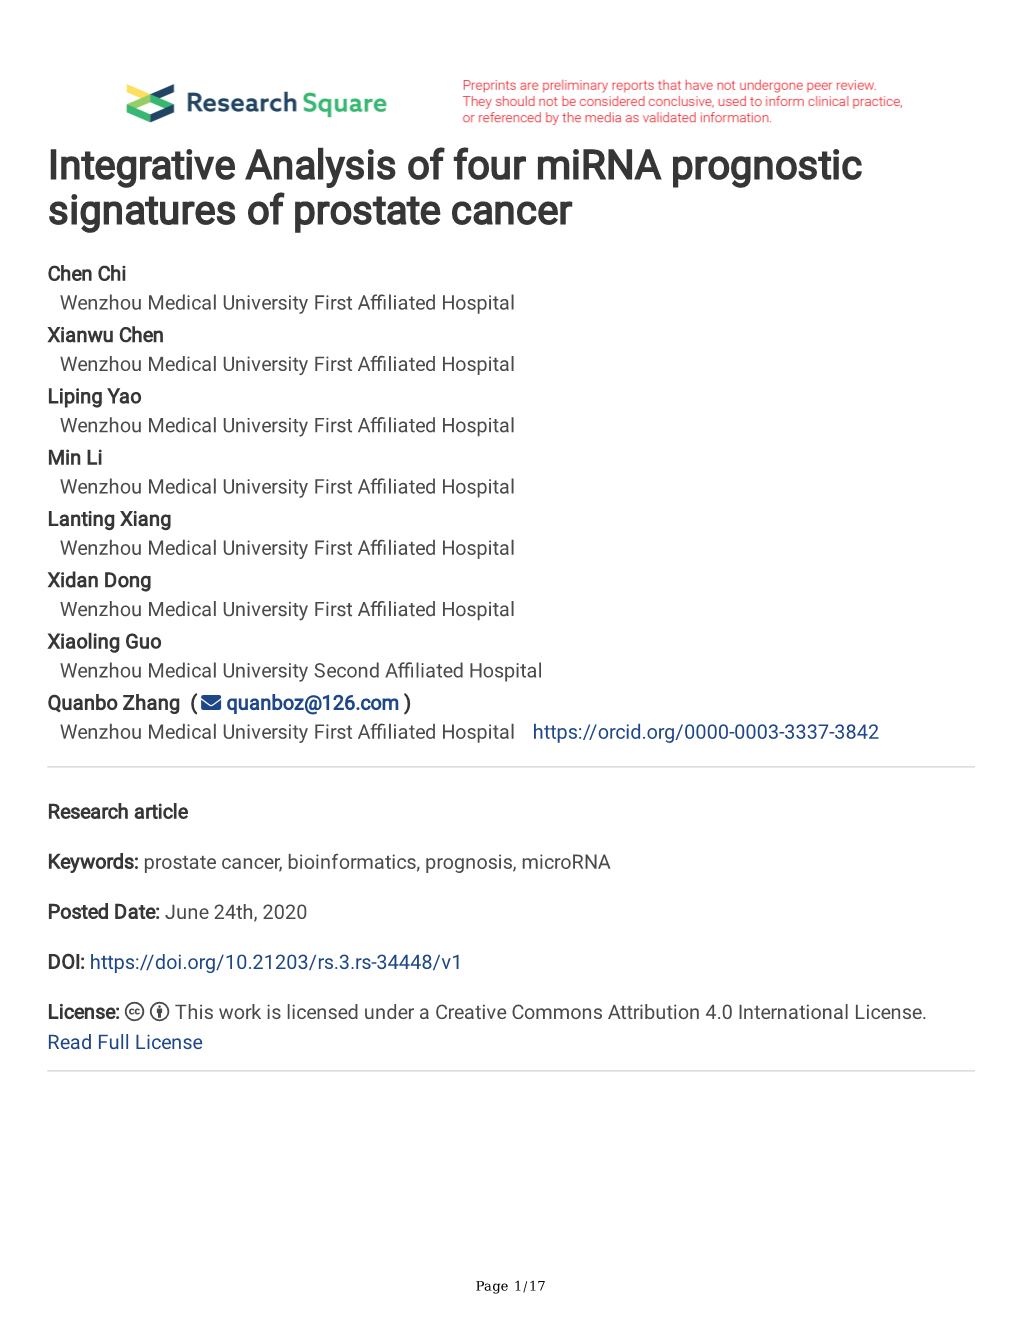 Integrative Analysis of Four Mirna Prognostic Signatures of Prostate Cancer